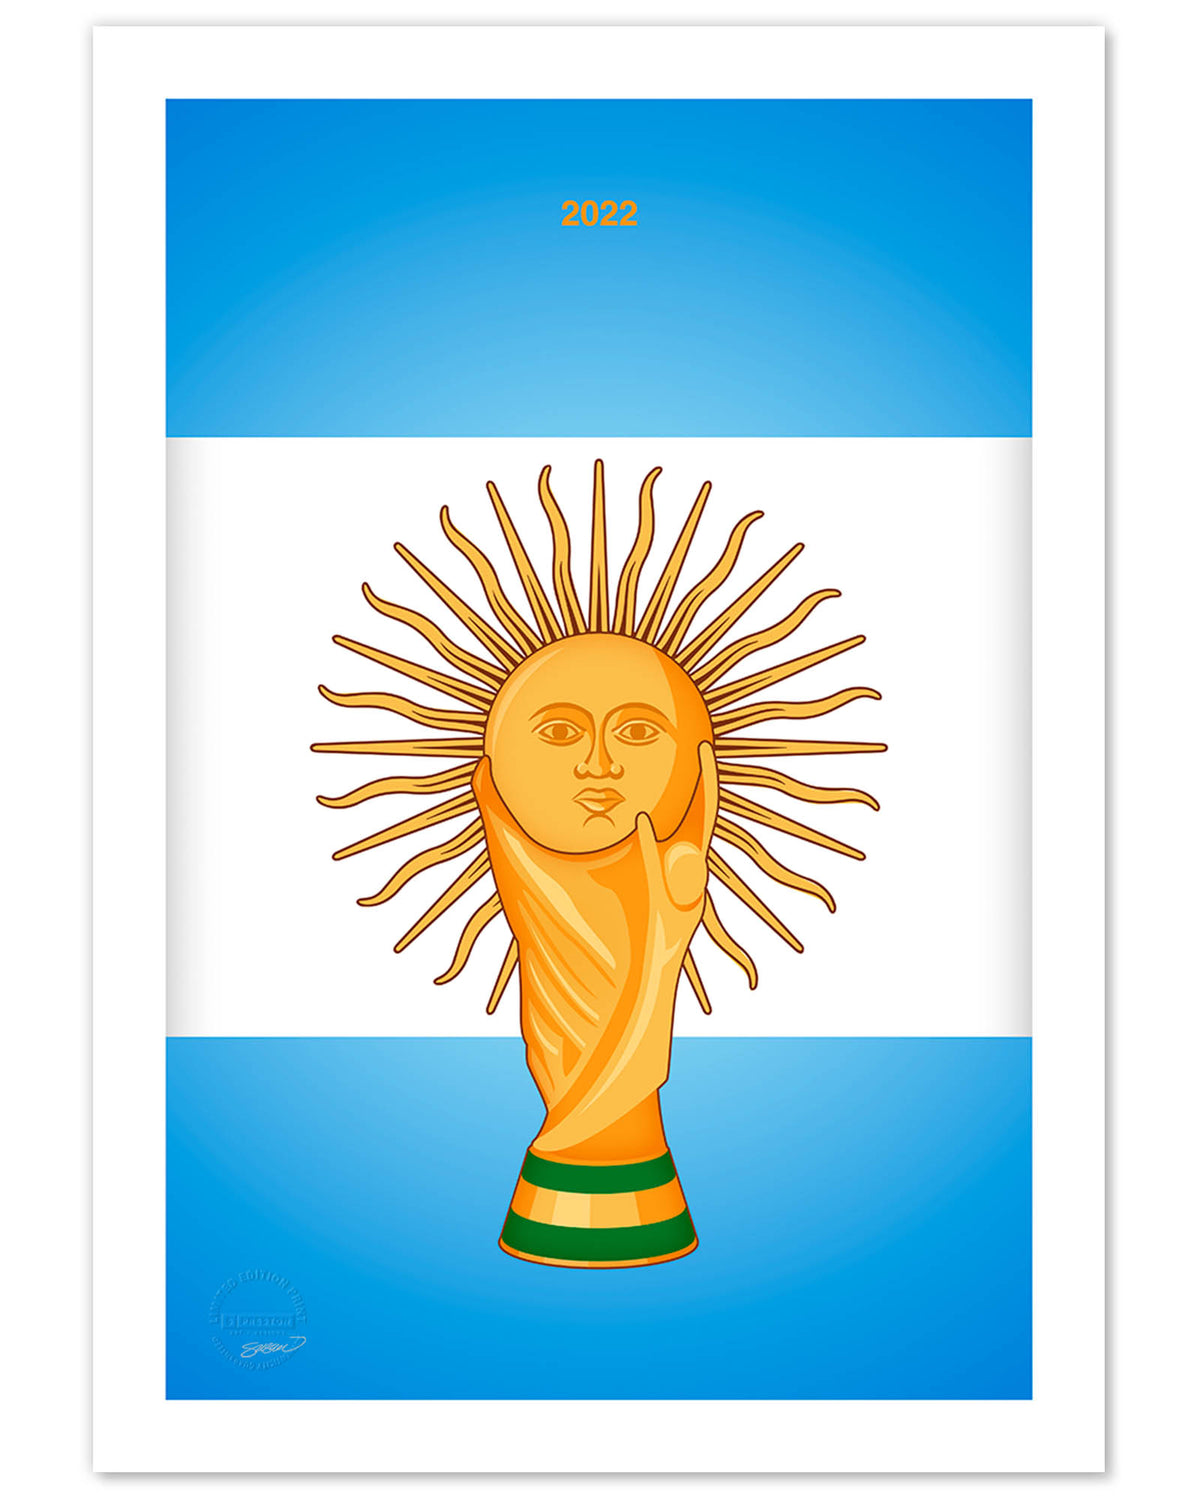 Minimalist World Cup 2022 Limited Edition Fine Art Print